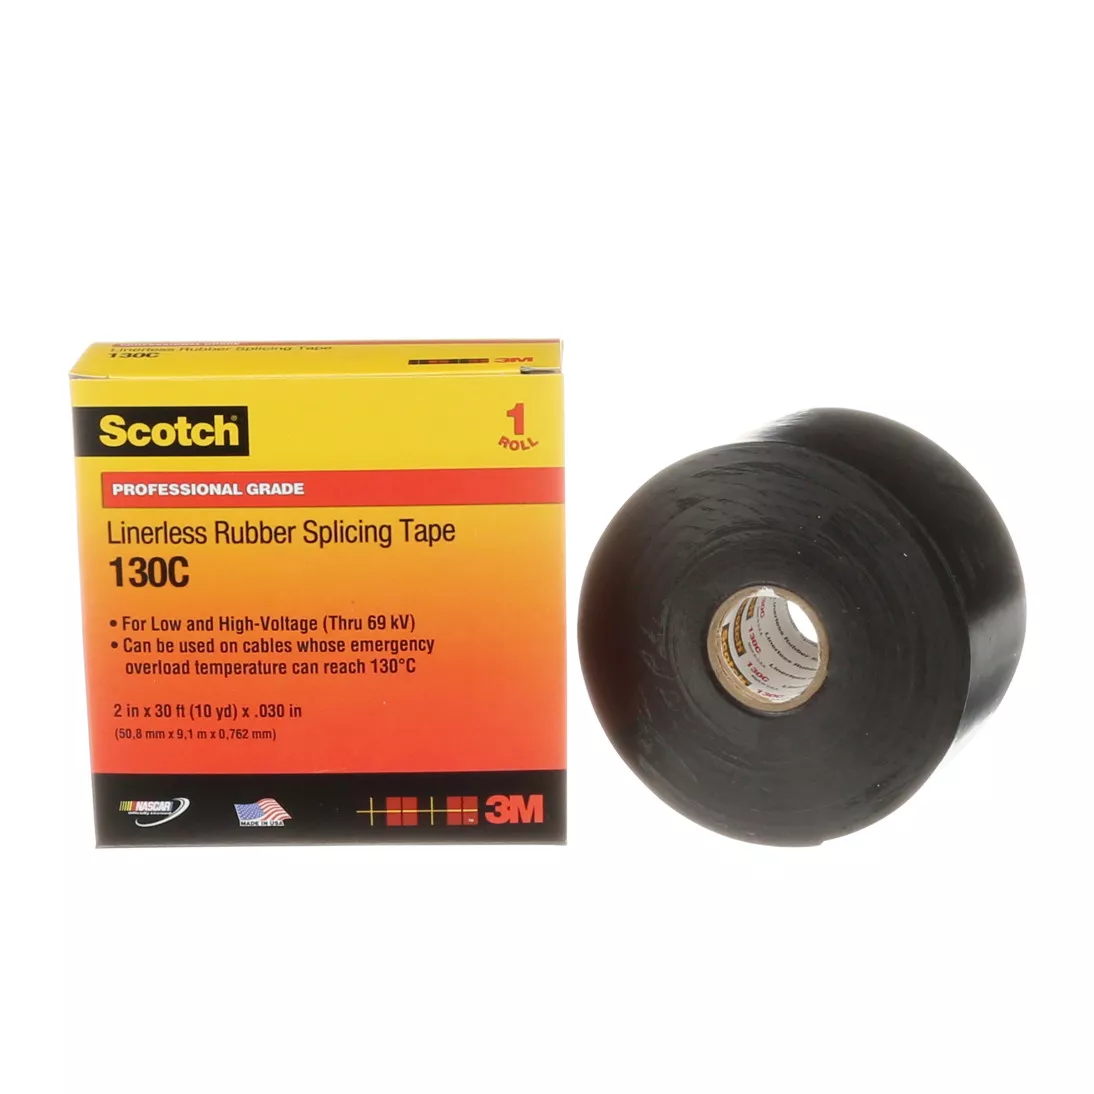 Scotch® Linerless Rubber Splicing Tape 130C, 2 in x 30 ft, Black, 12
rolls/Case